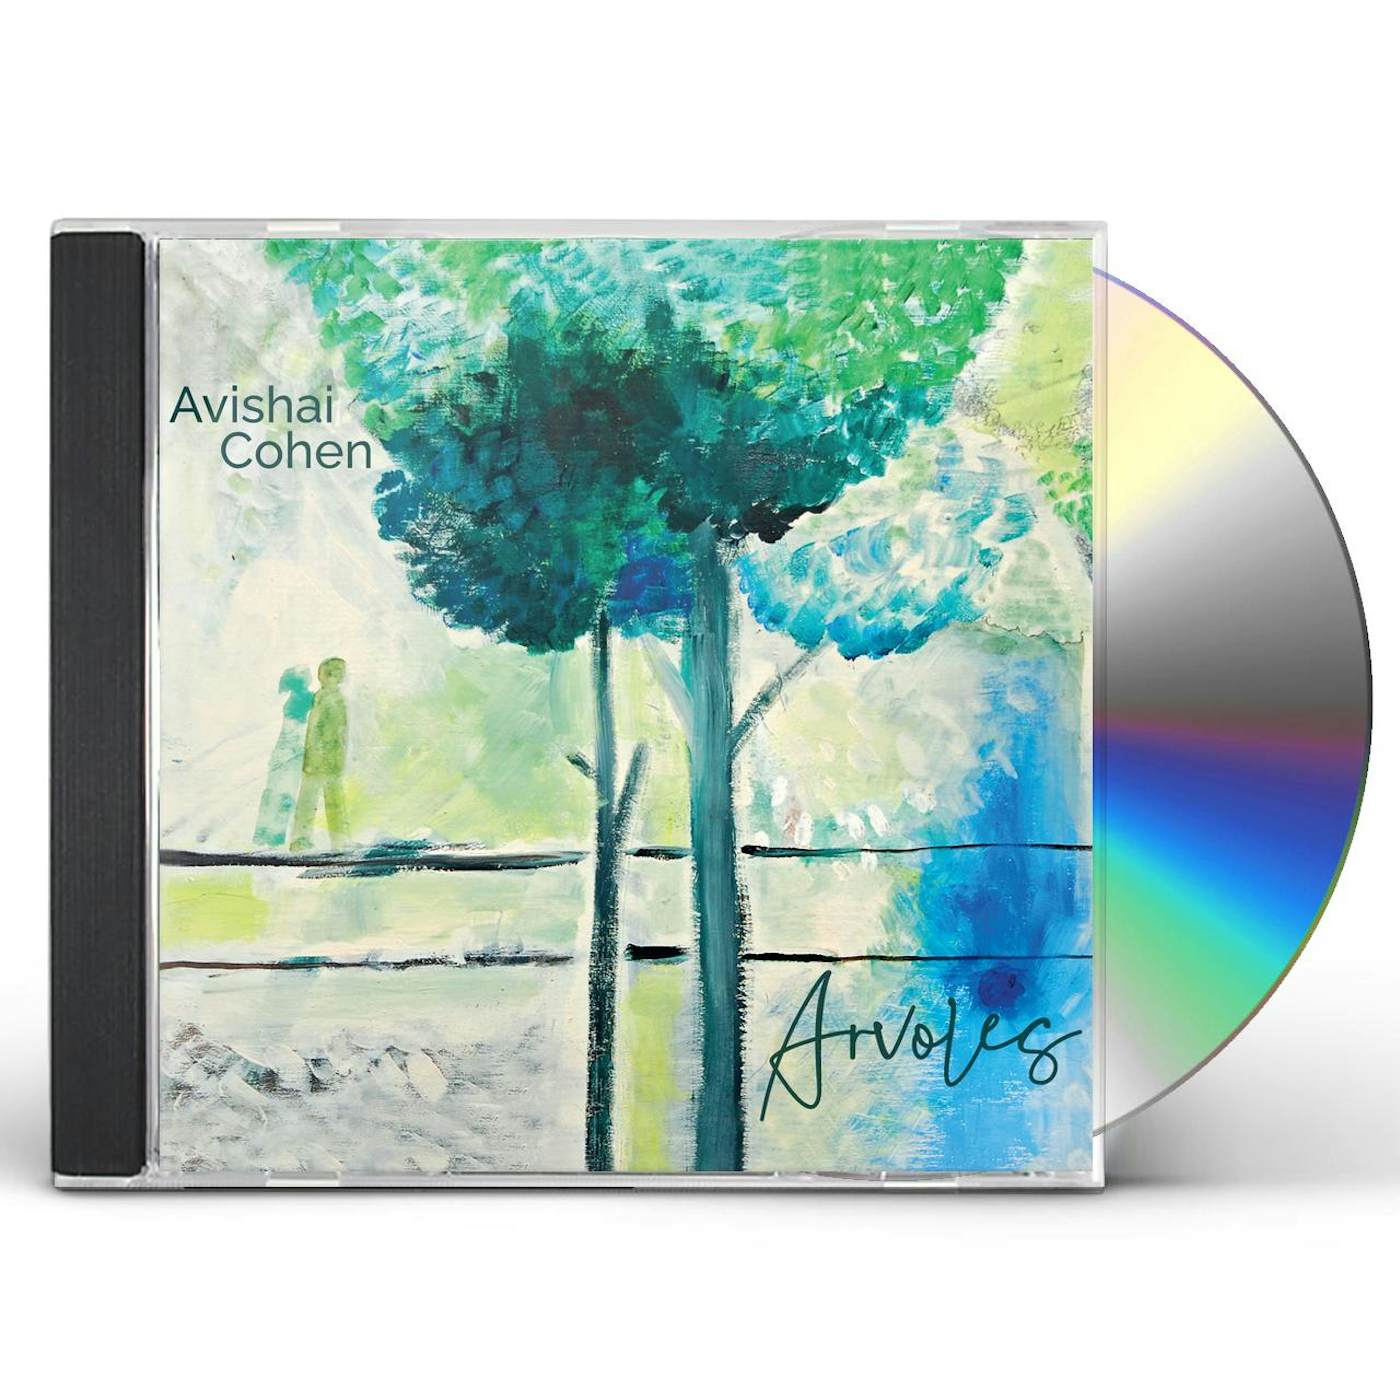 Avishai Cohen ARVOLES CD